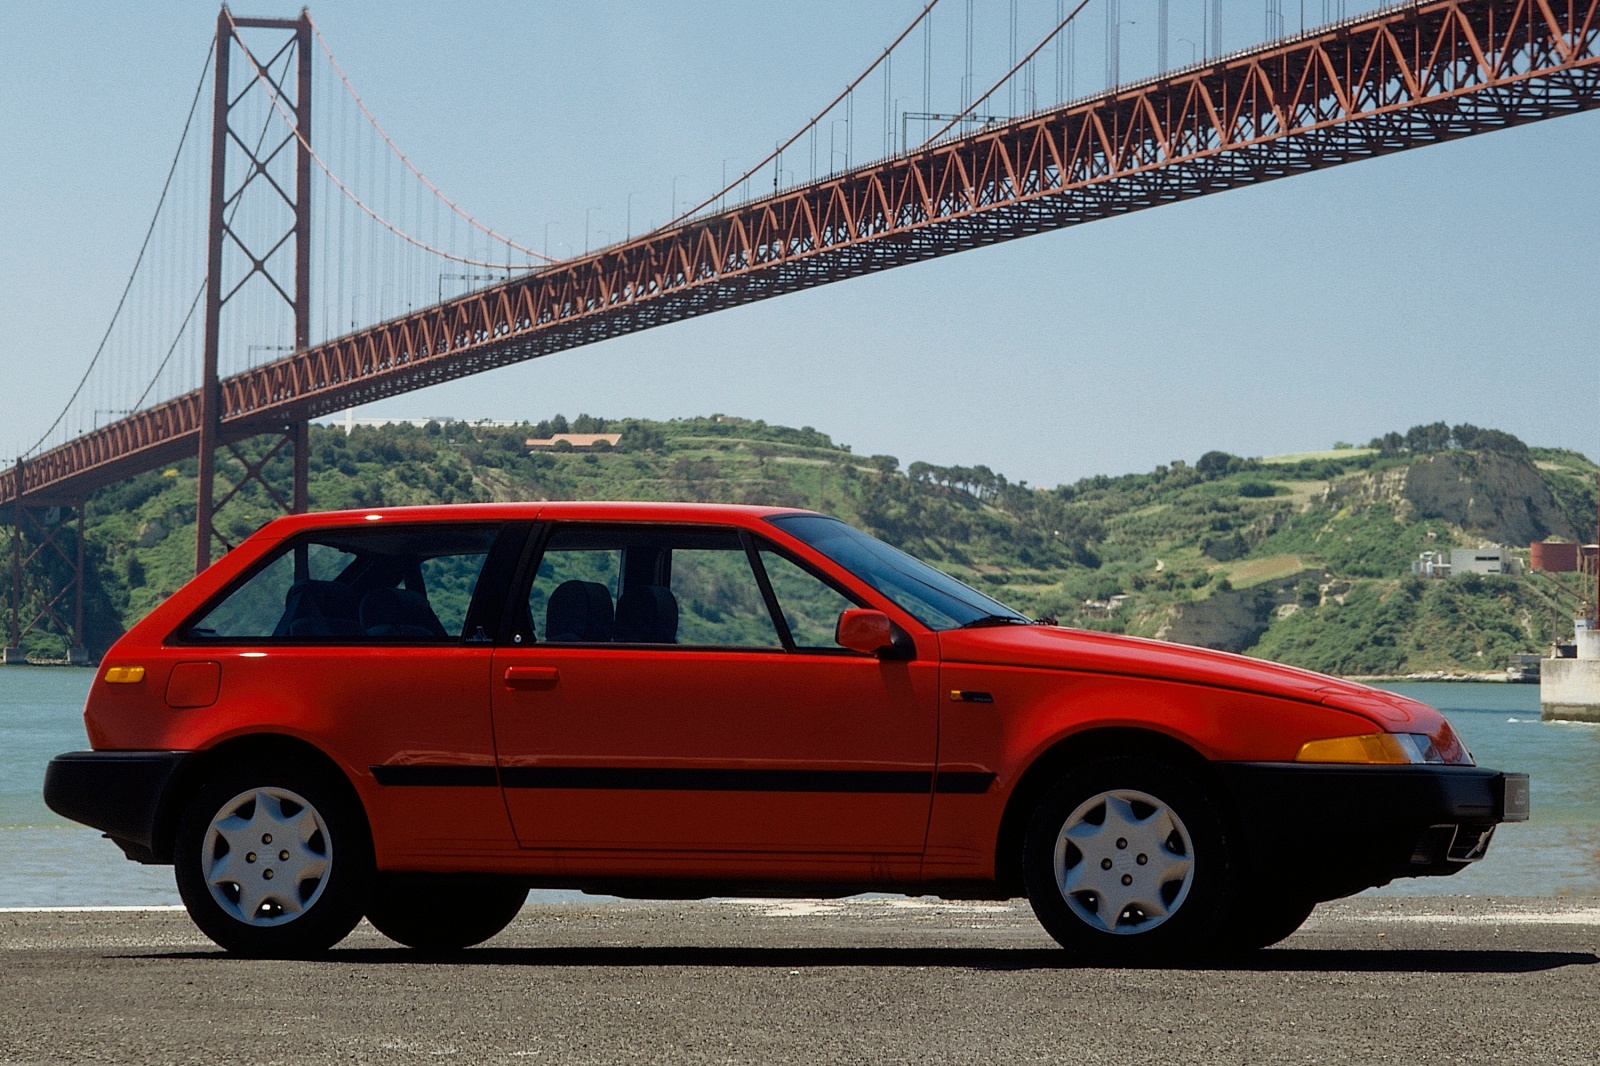 Volvo 480 ES made its debut at the Geneva Motorshow in 1986.